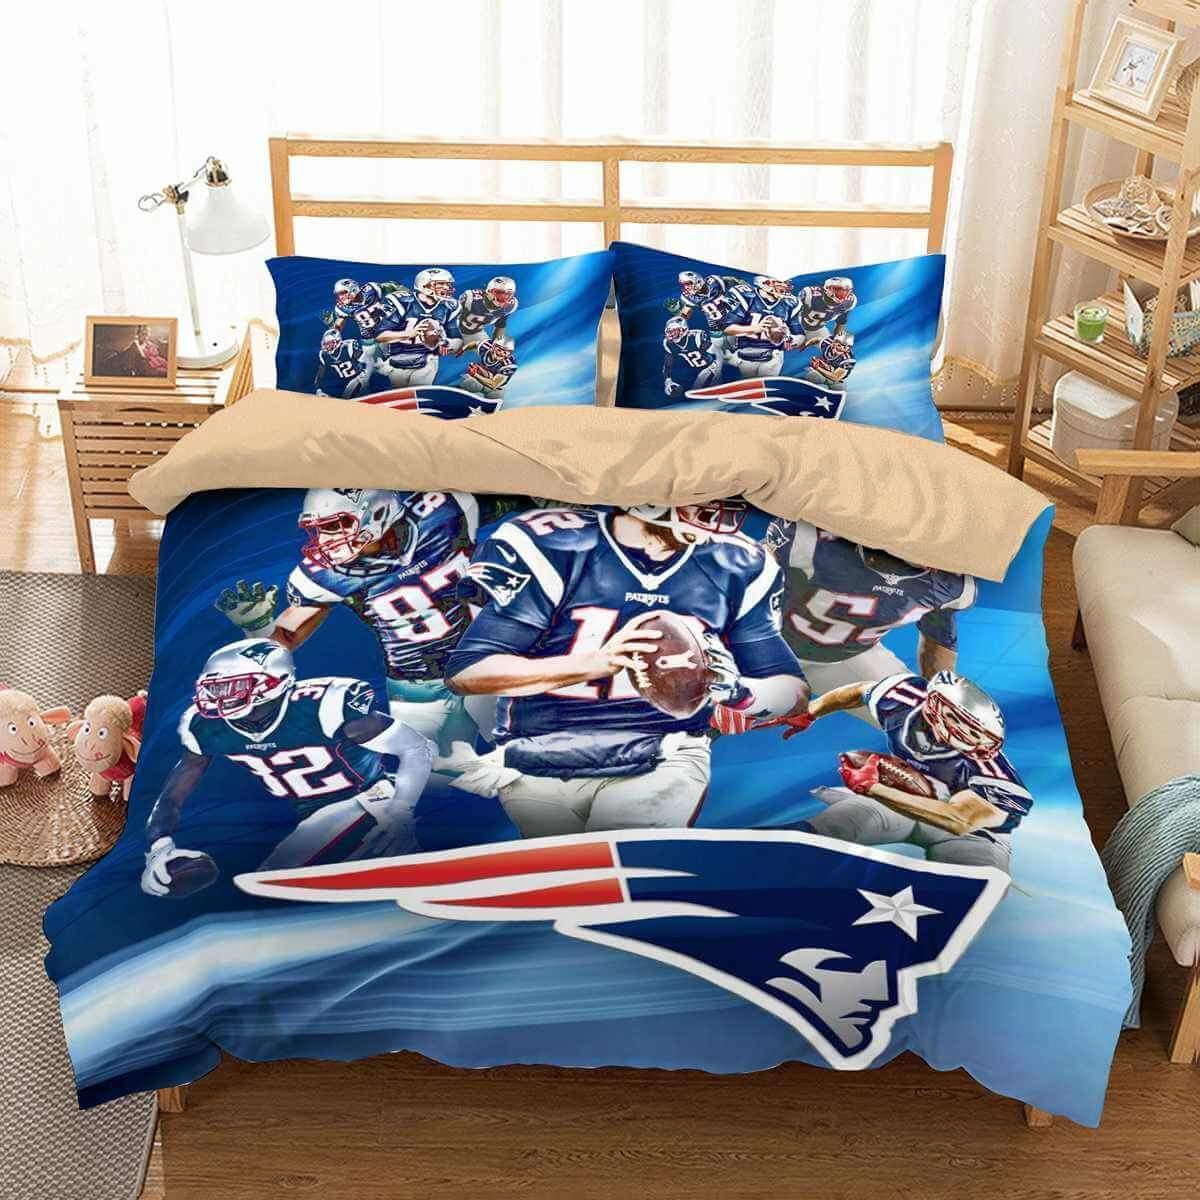 BEST New England Patriots NFL players Duvet Cover Bedding Set2